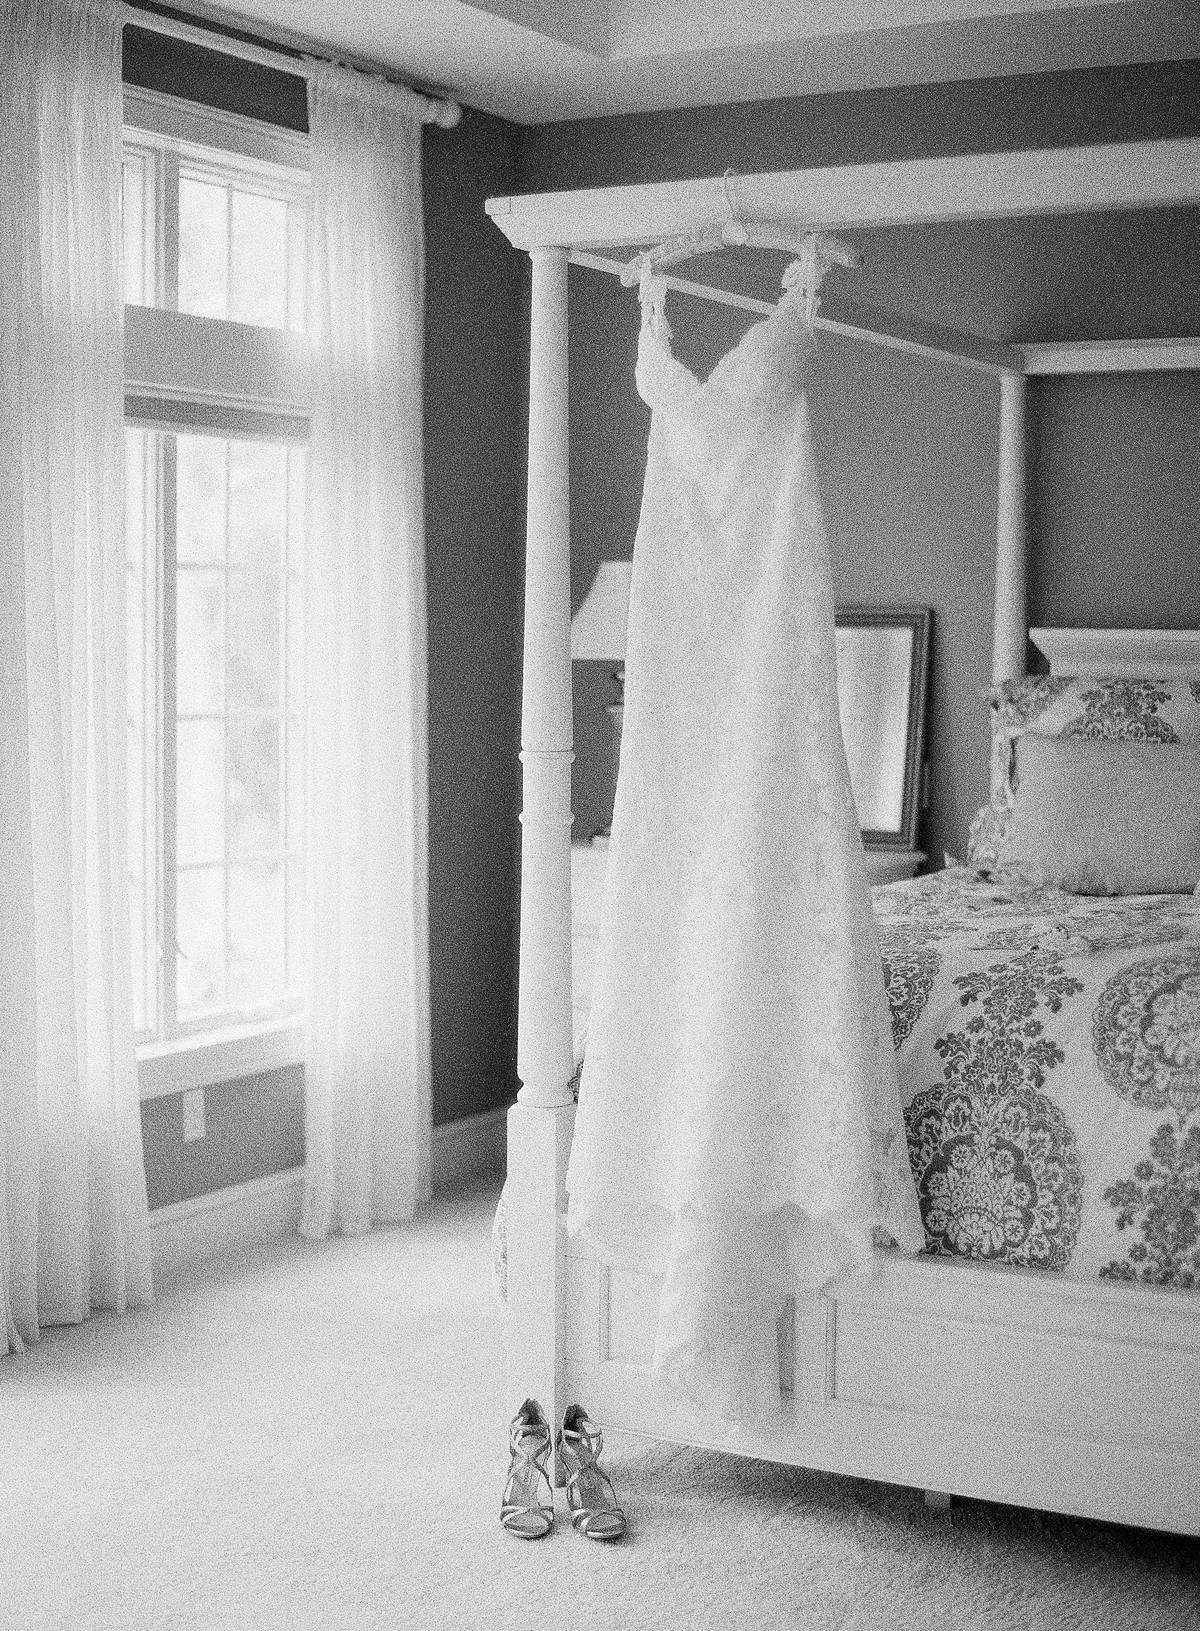 wedding dress hanging on bed